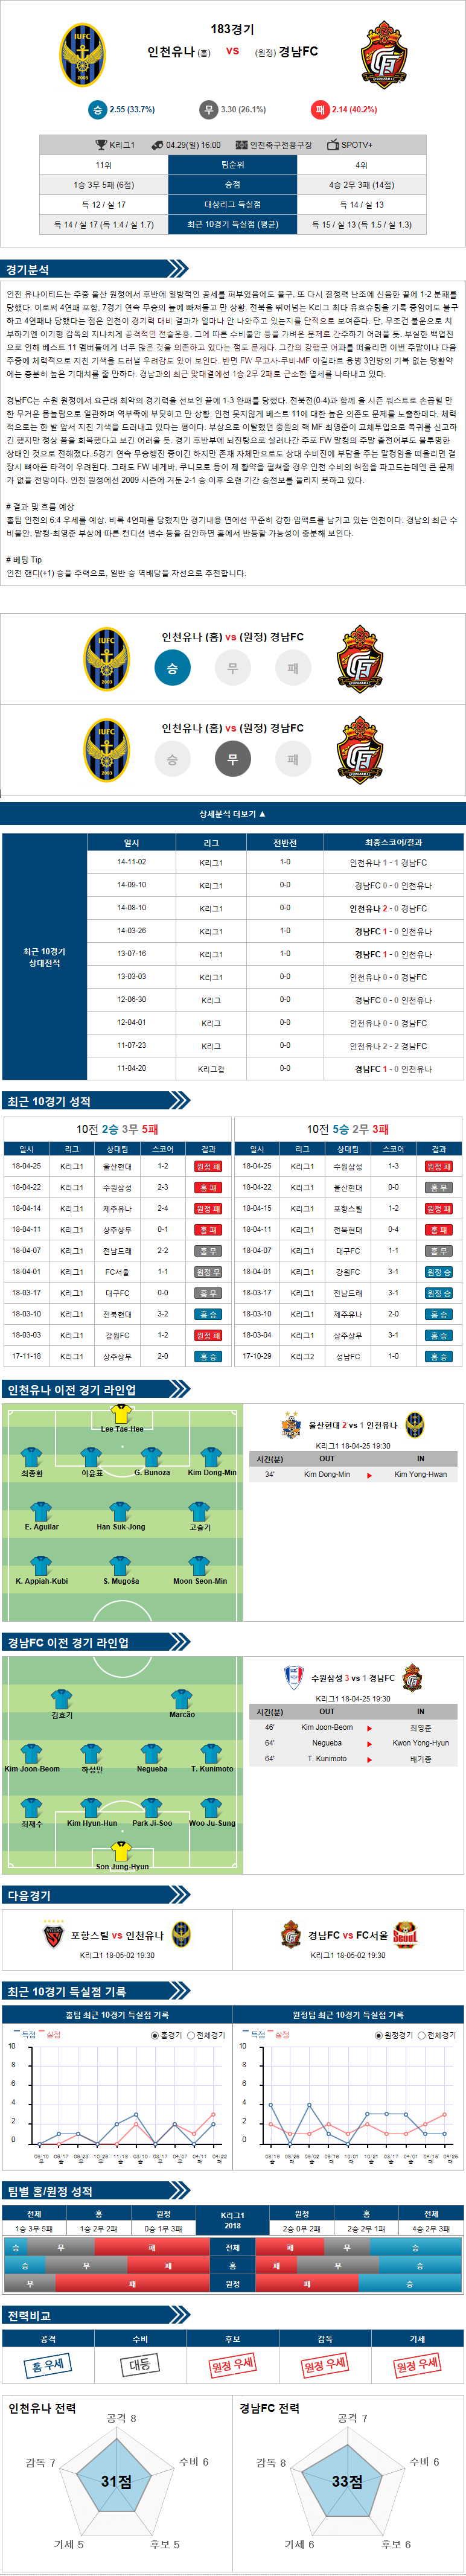 4-29 [KOR D1] 16:00 축구분석 인천 vs 경남